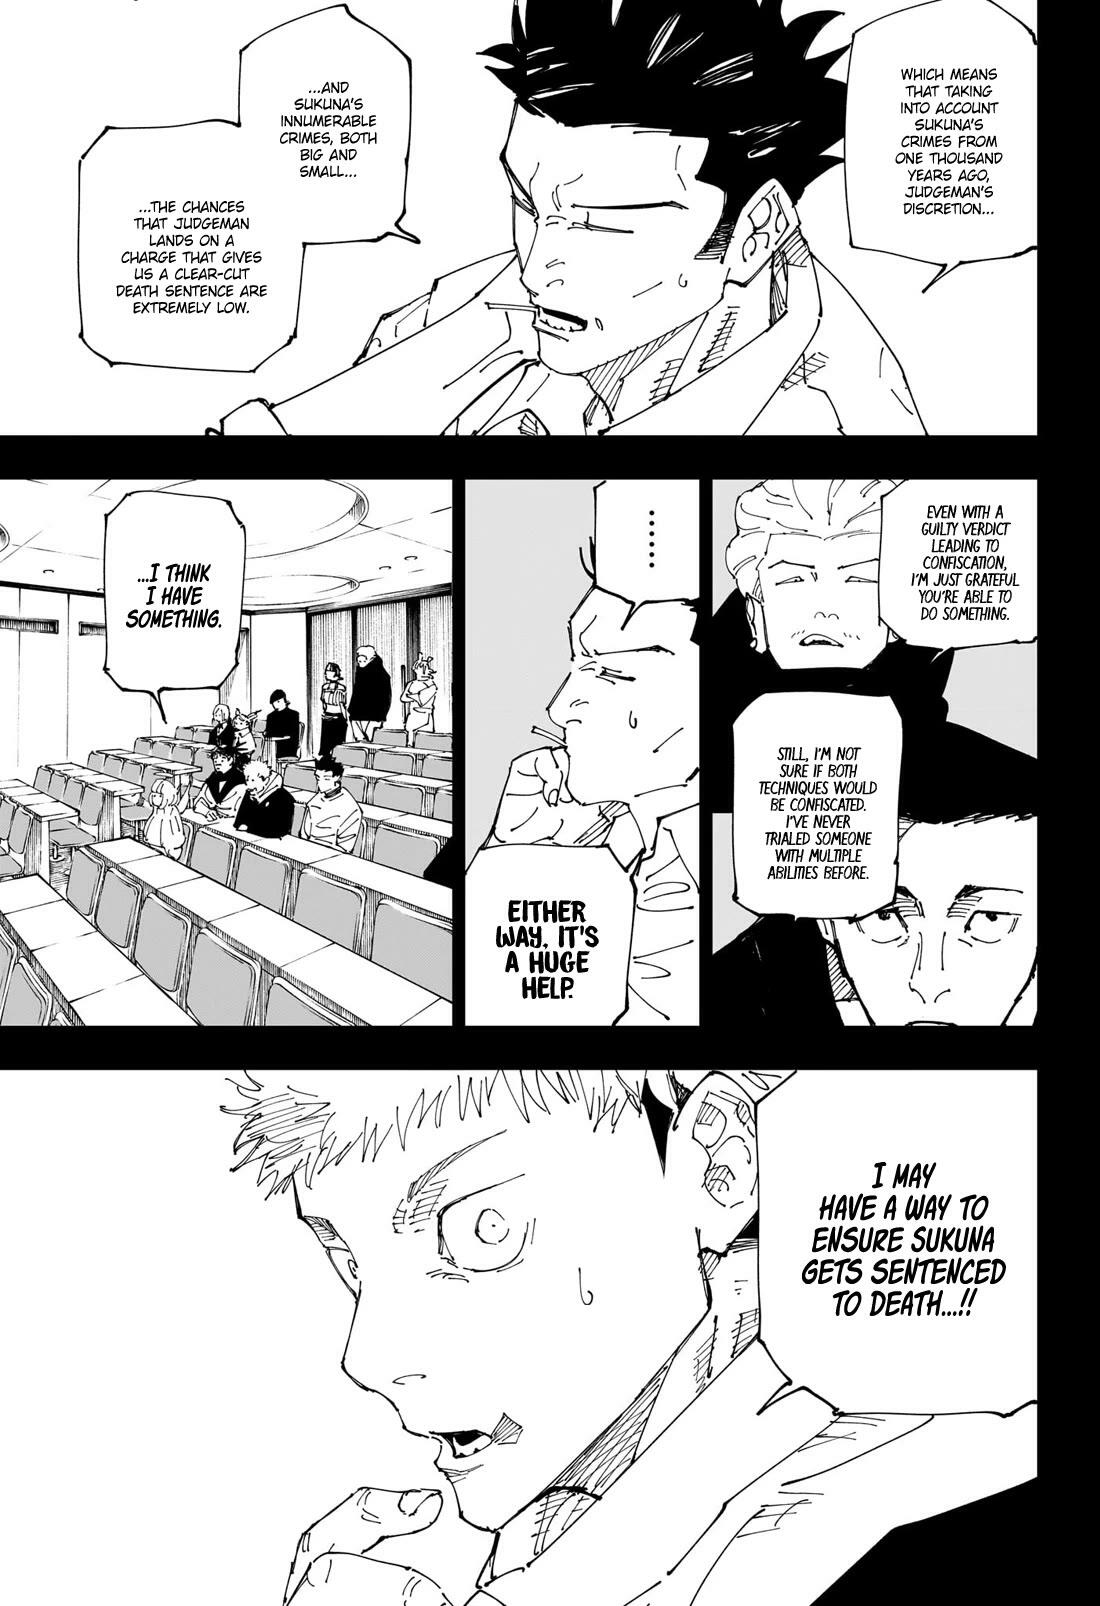 Jujutsu Kaisen Chapter 244: The Decisive Battle In The Uninhabited, Demon-Infested Shinjuku ⑯ page 12 - Mangakakalot